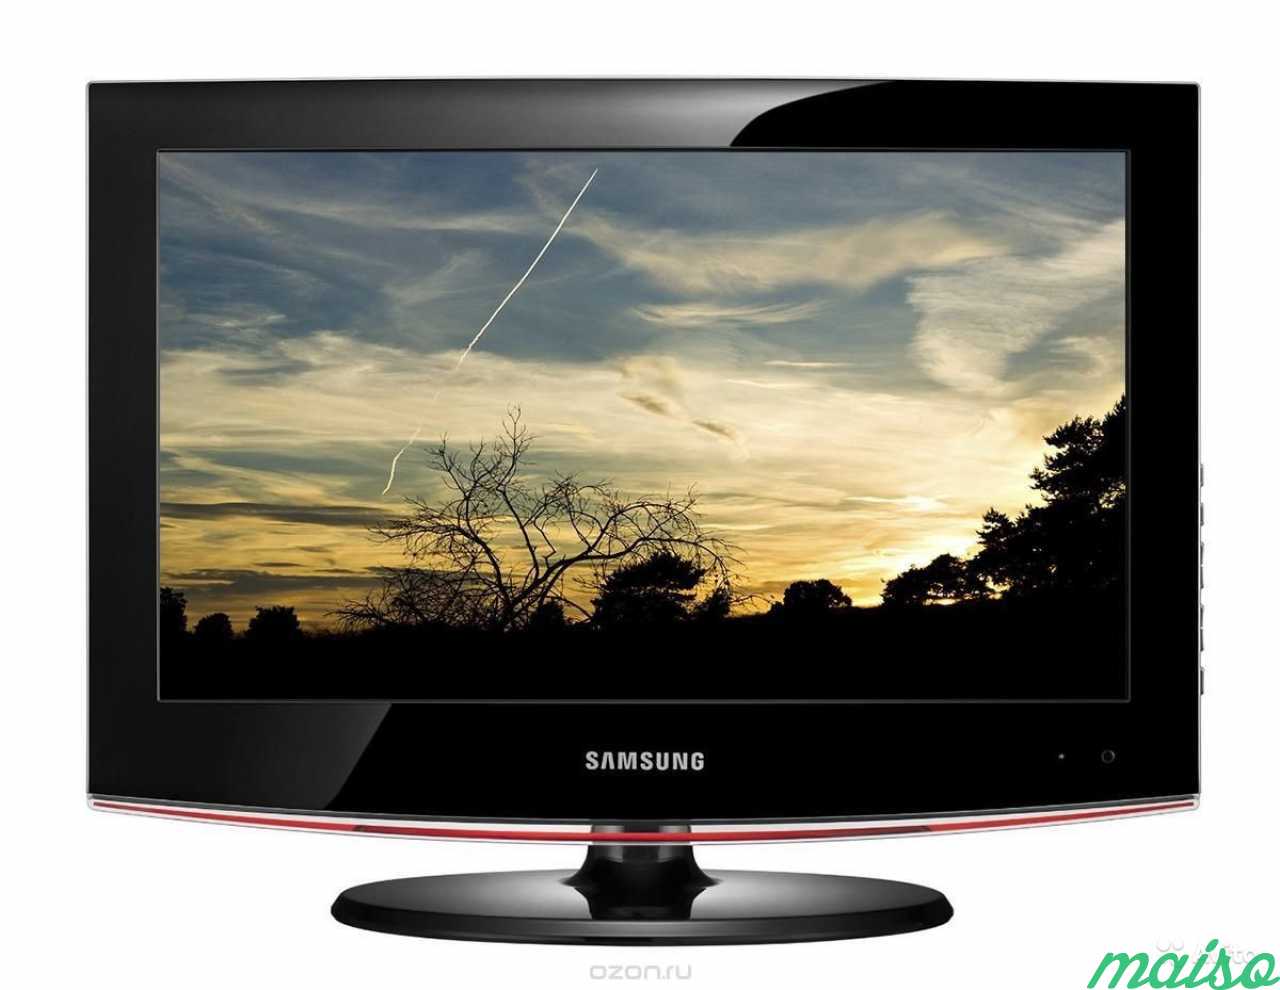 Куплю телевизор в калининграде недорого. Samsung le22b450. Samsung le-22c450. Телевизор Samsung le-32b450. Телевизор самсунг le32b650t6w.